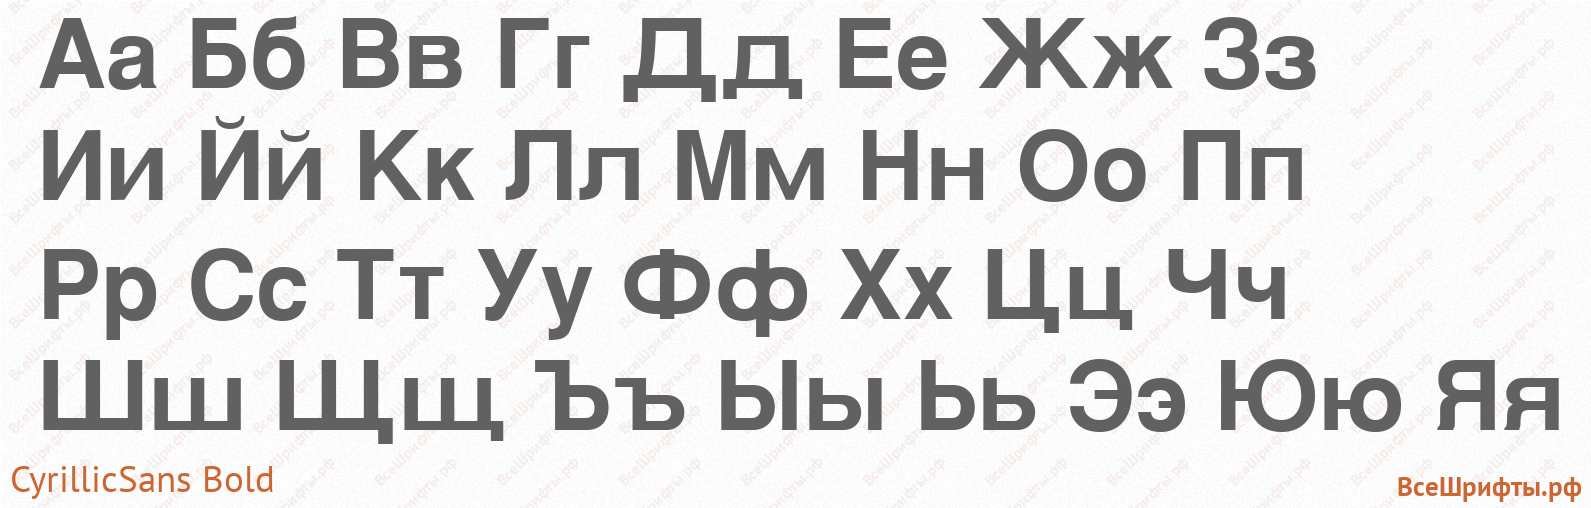 Шрифт CyrillicSans Bold с русскими буквами